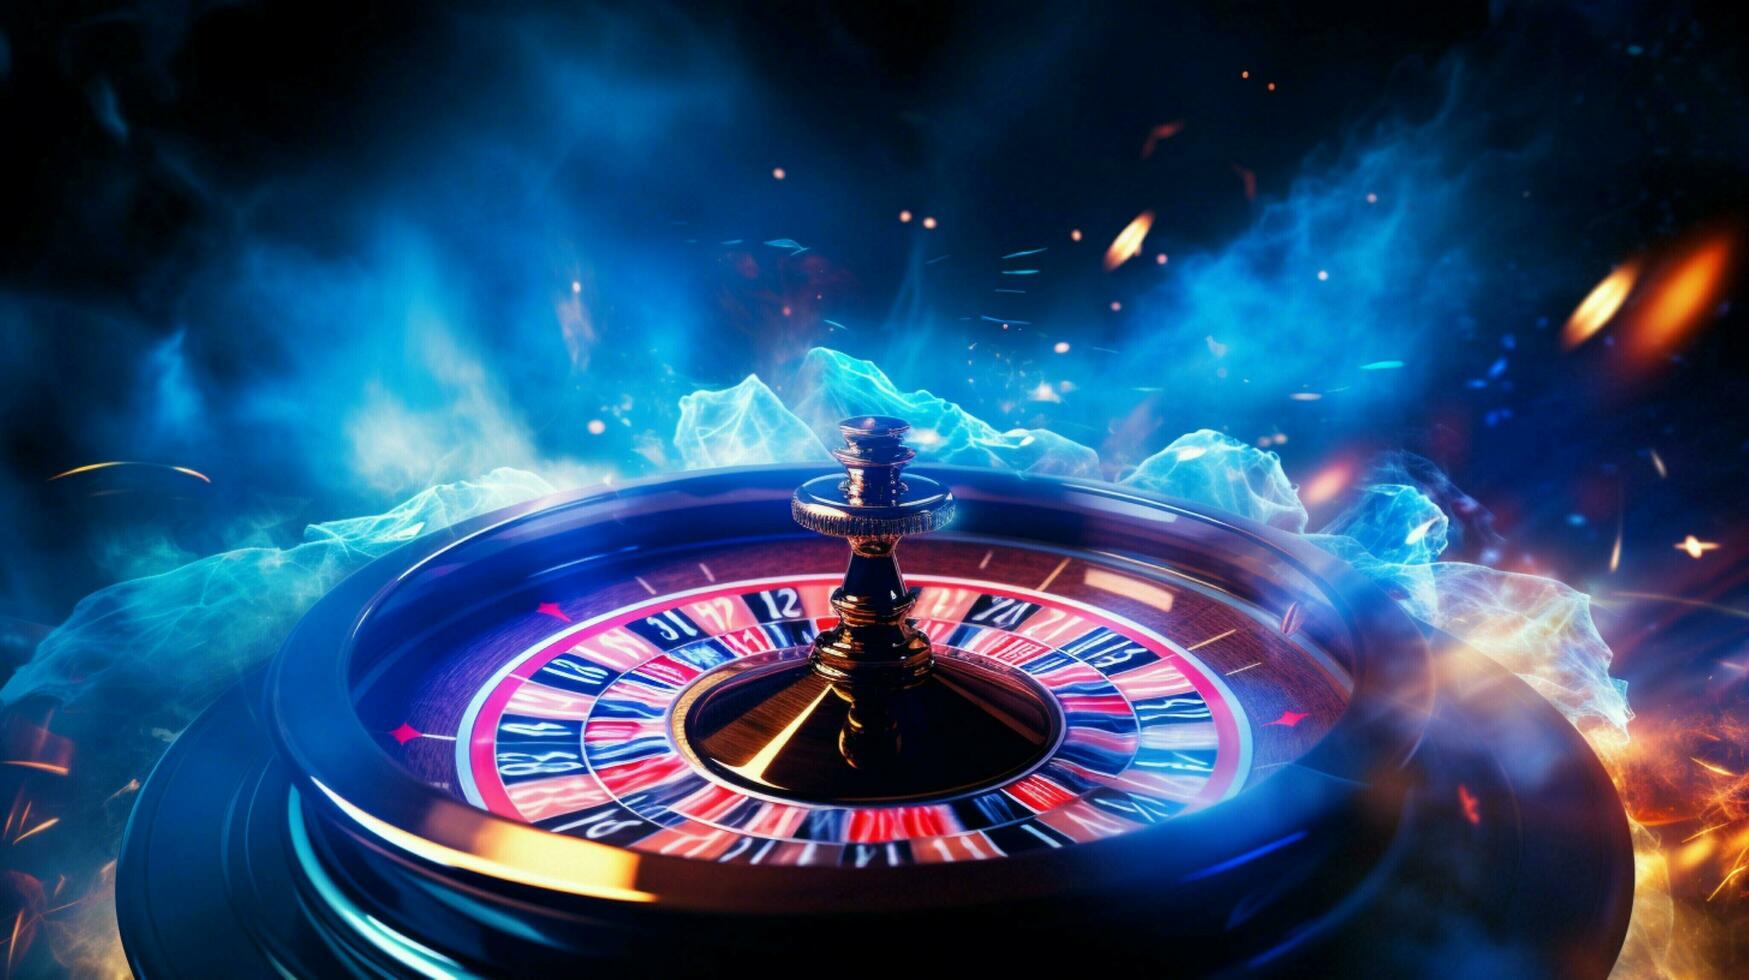 hilado ruleta rueda azul fuego bote casino último foto